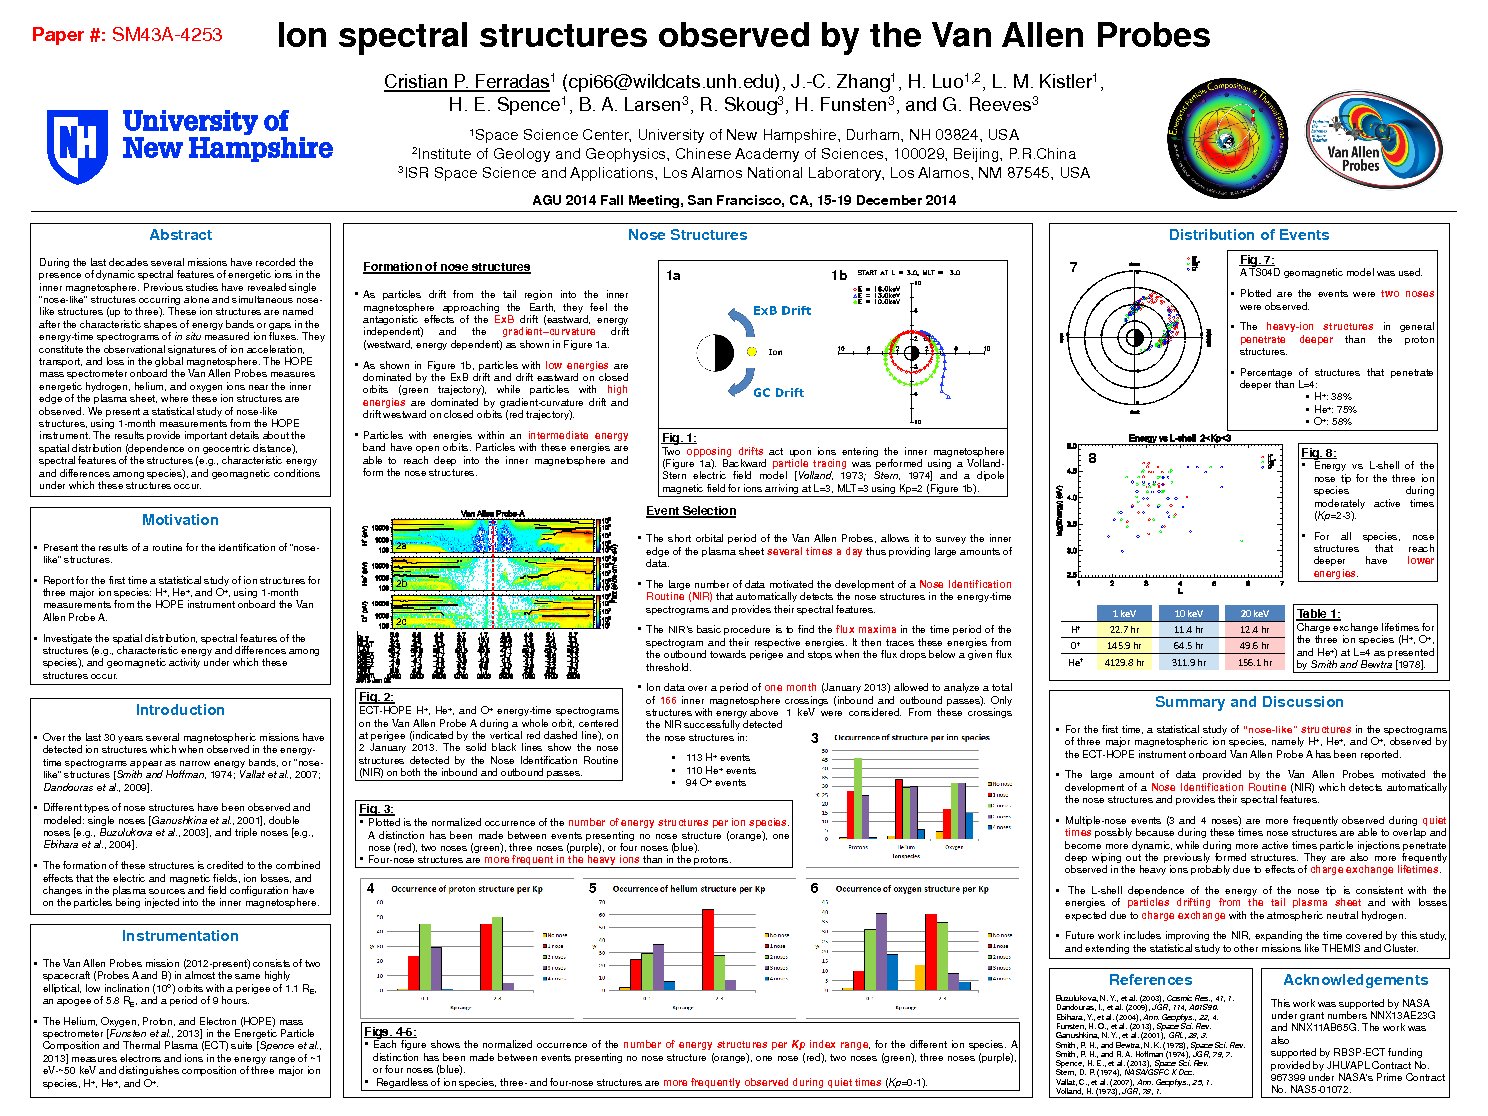 Ion Spectral Structures Observed By The Van Allen Probes by cferradas